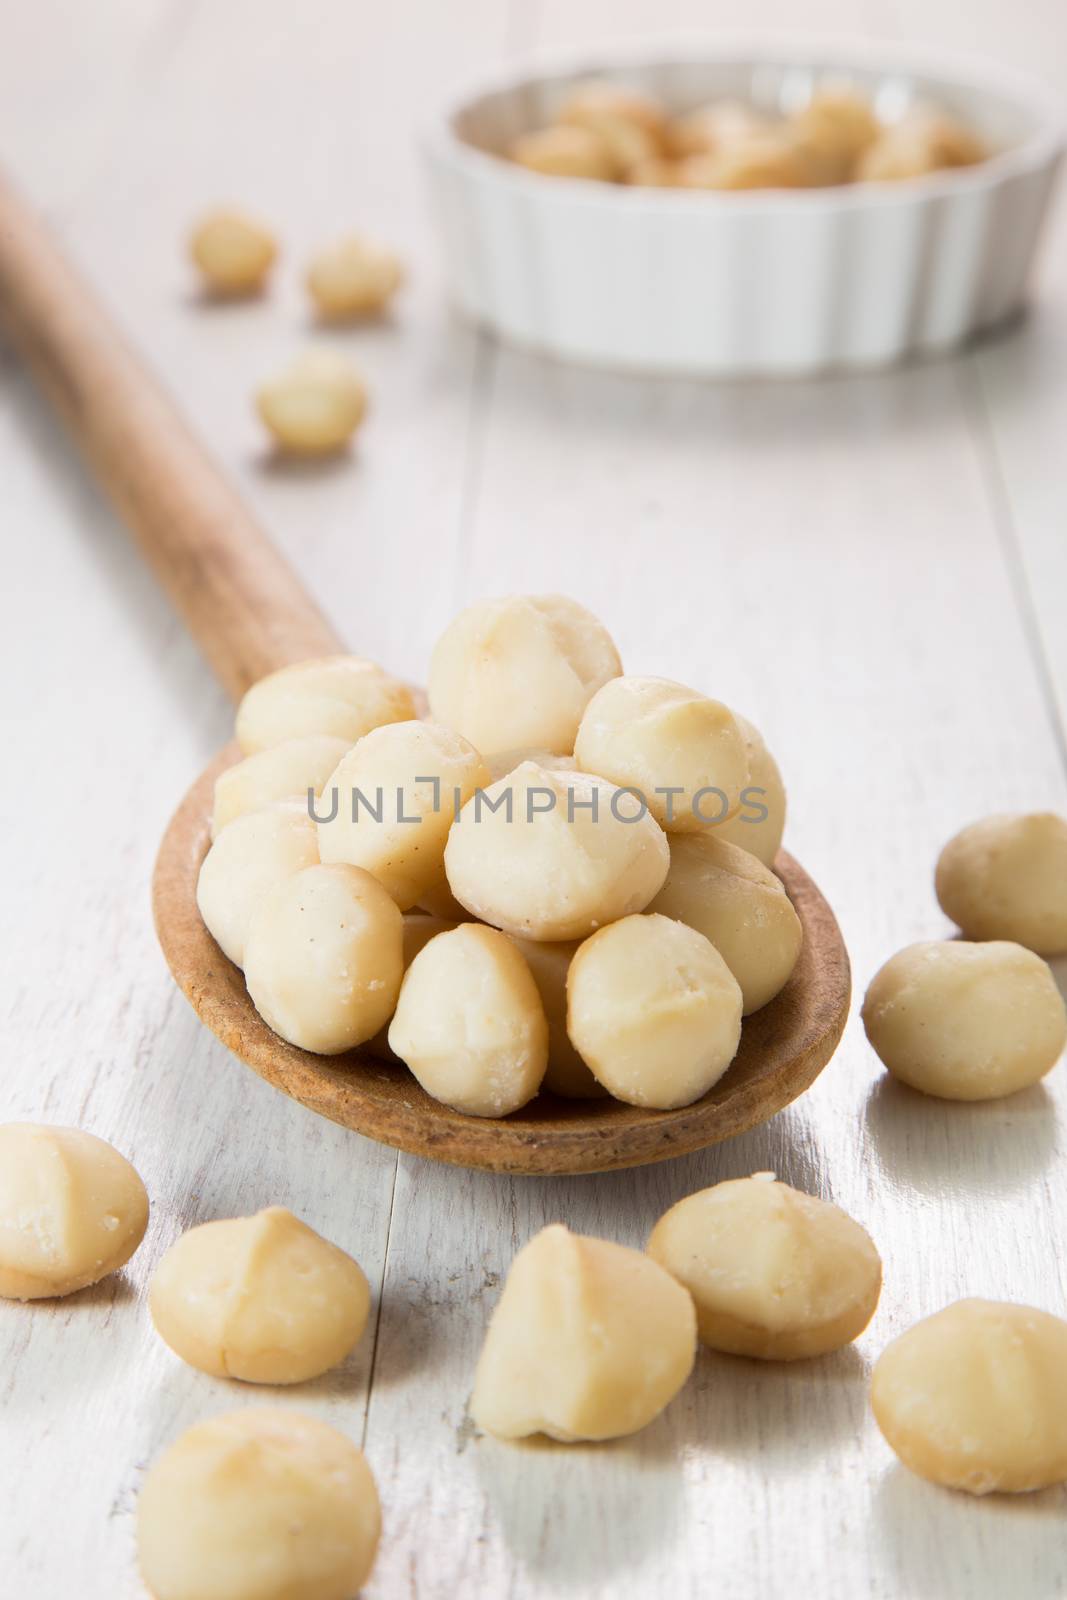 macadamia nut by tehcheesiong